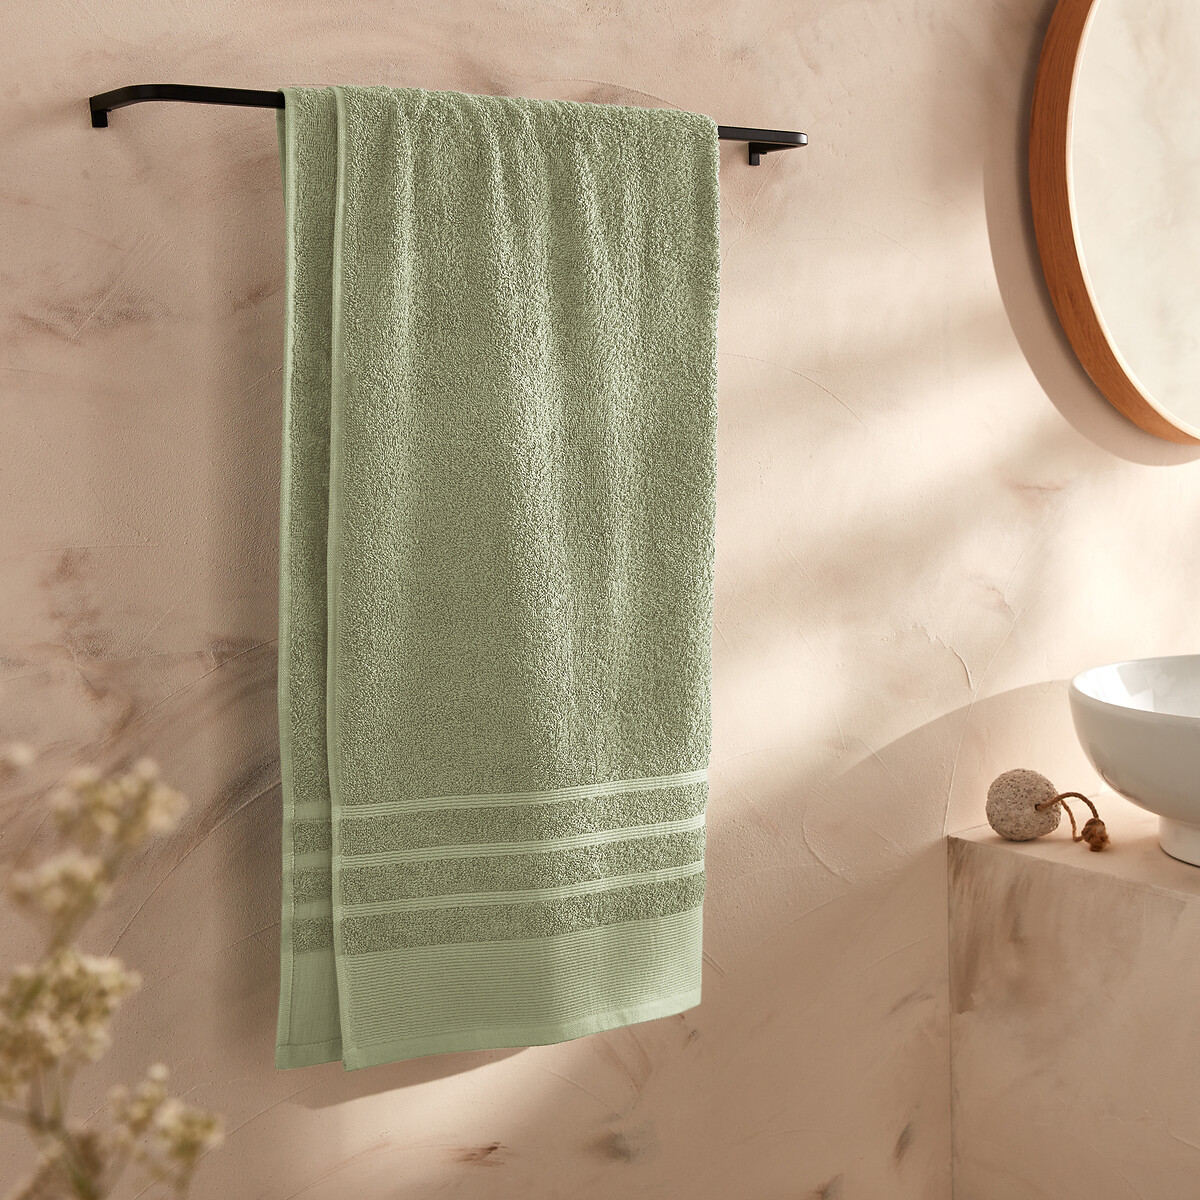 Полотенце банное 600 гм 70 x 140 см зеленый полотенце laredoute полотенце банное 600 гм качество best 100 x 150 см зеленый